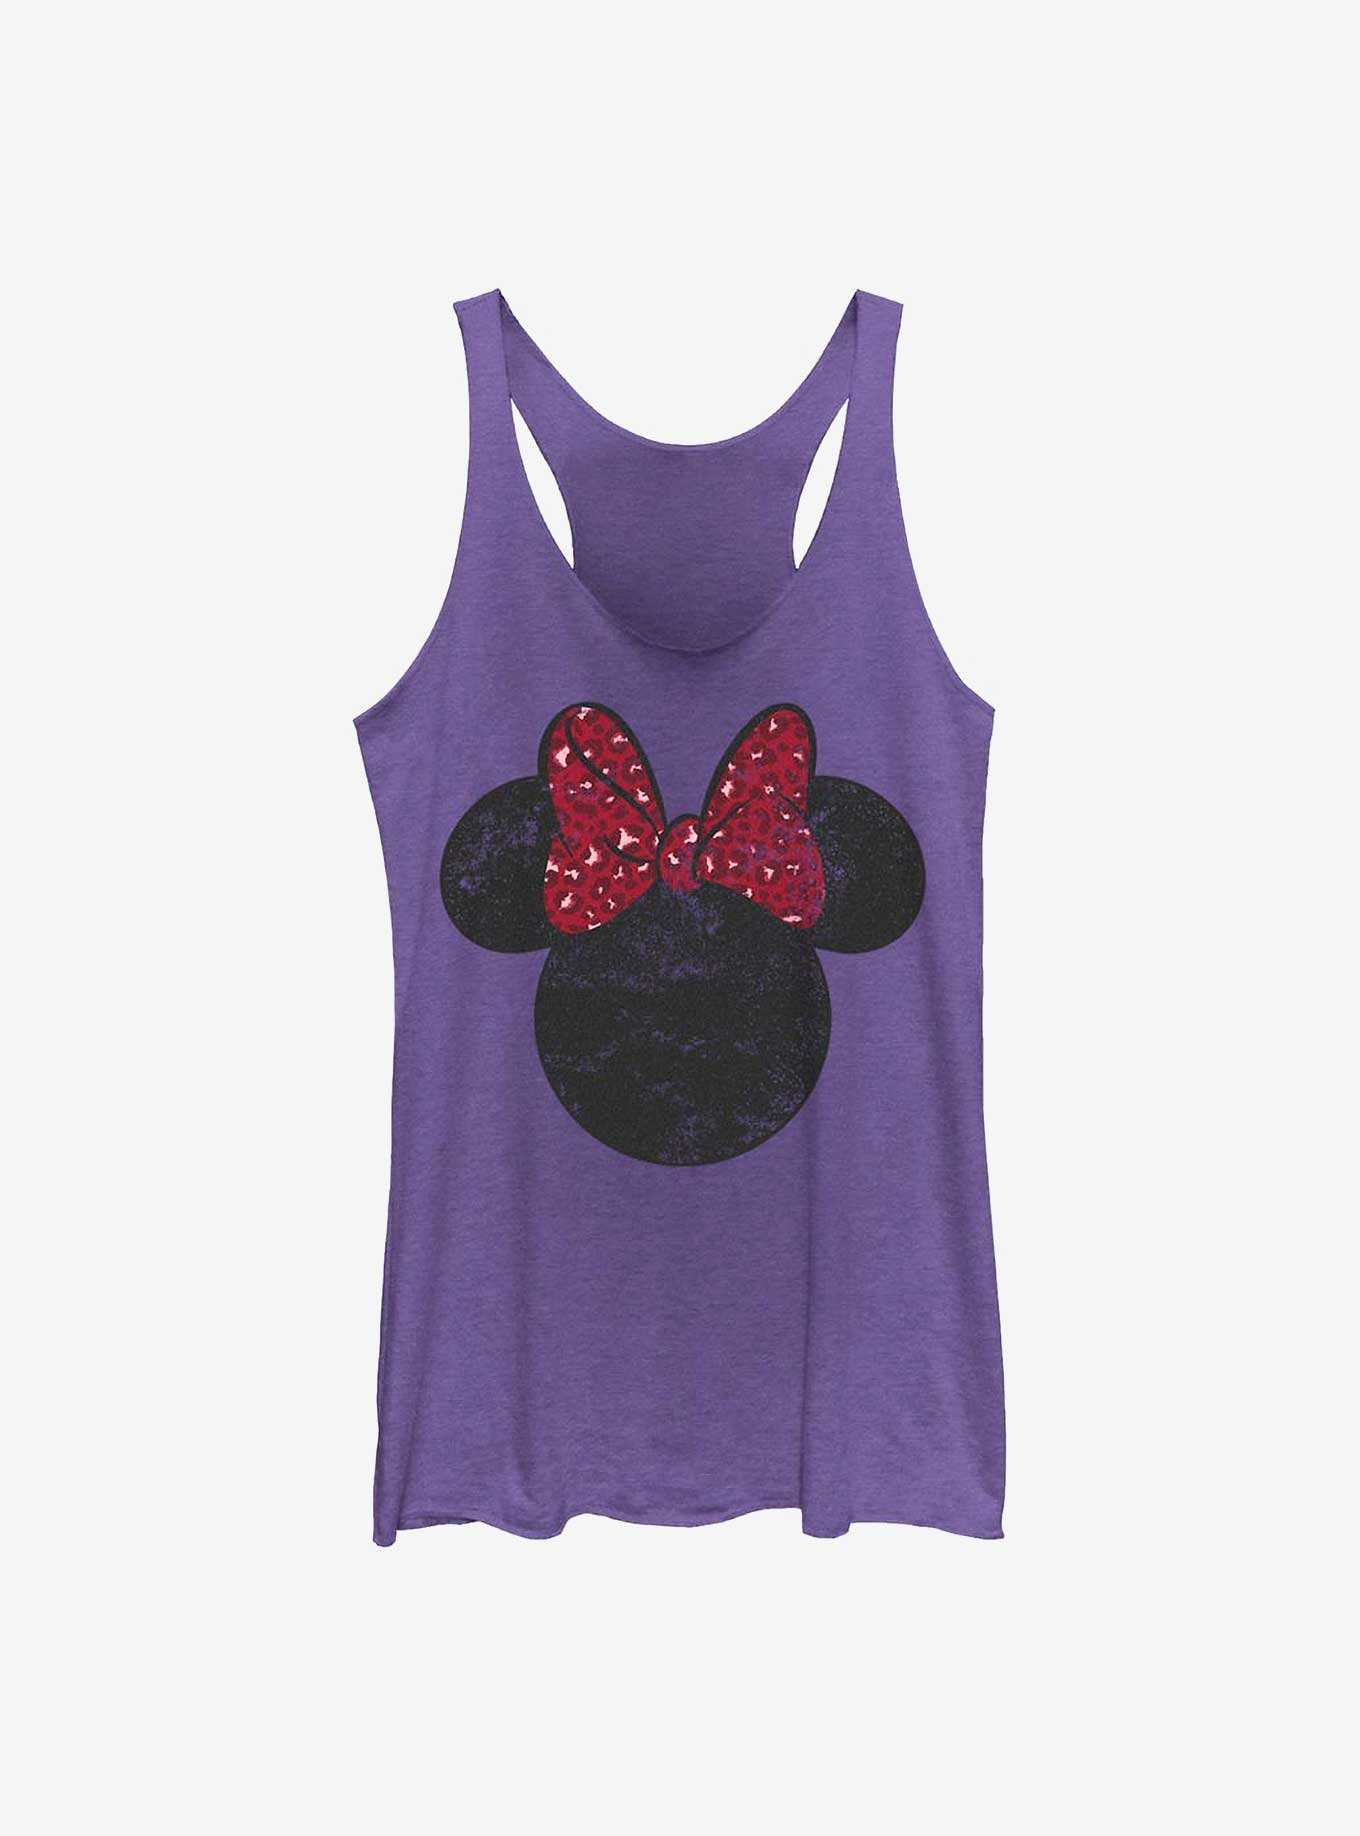 Disney Minnie Mouse Leopard Bow Ears Girls Tank, , hi-res